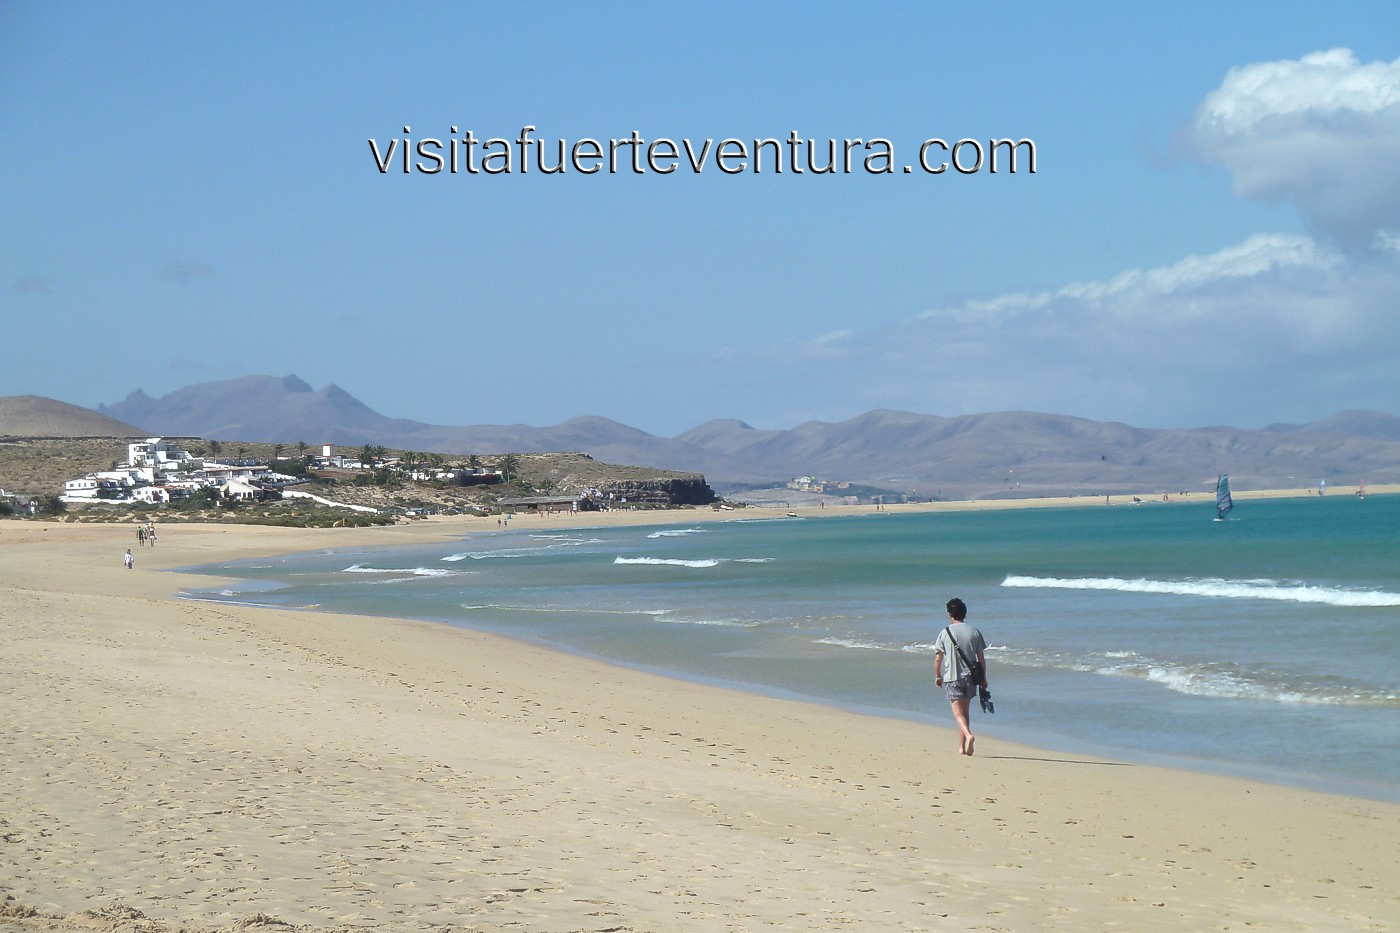 Windsurfing in Playa Barca Strand, Sotavento Strand in Fuerteventura.